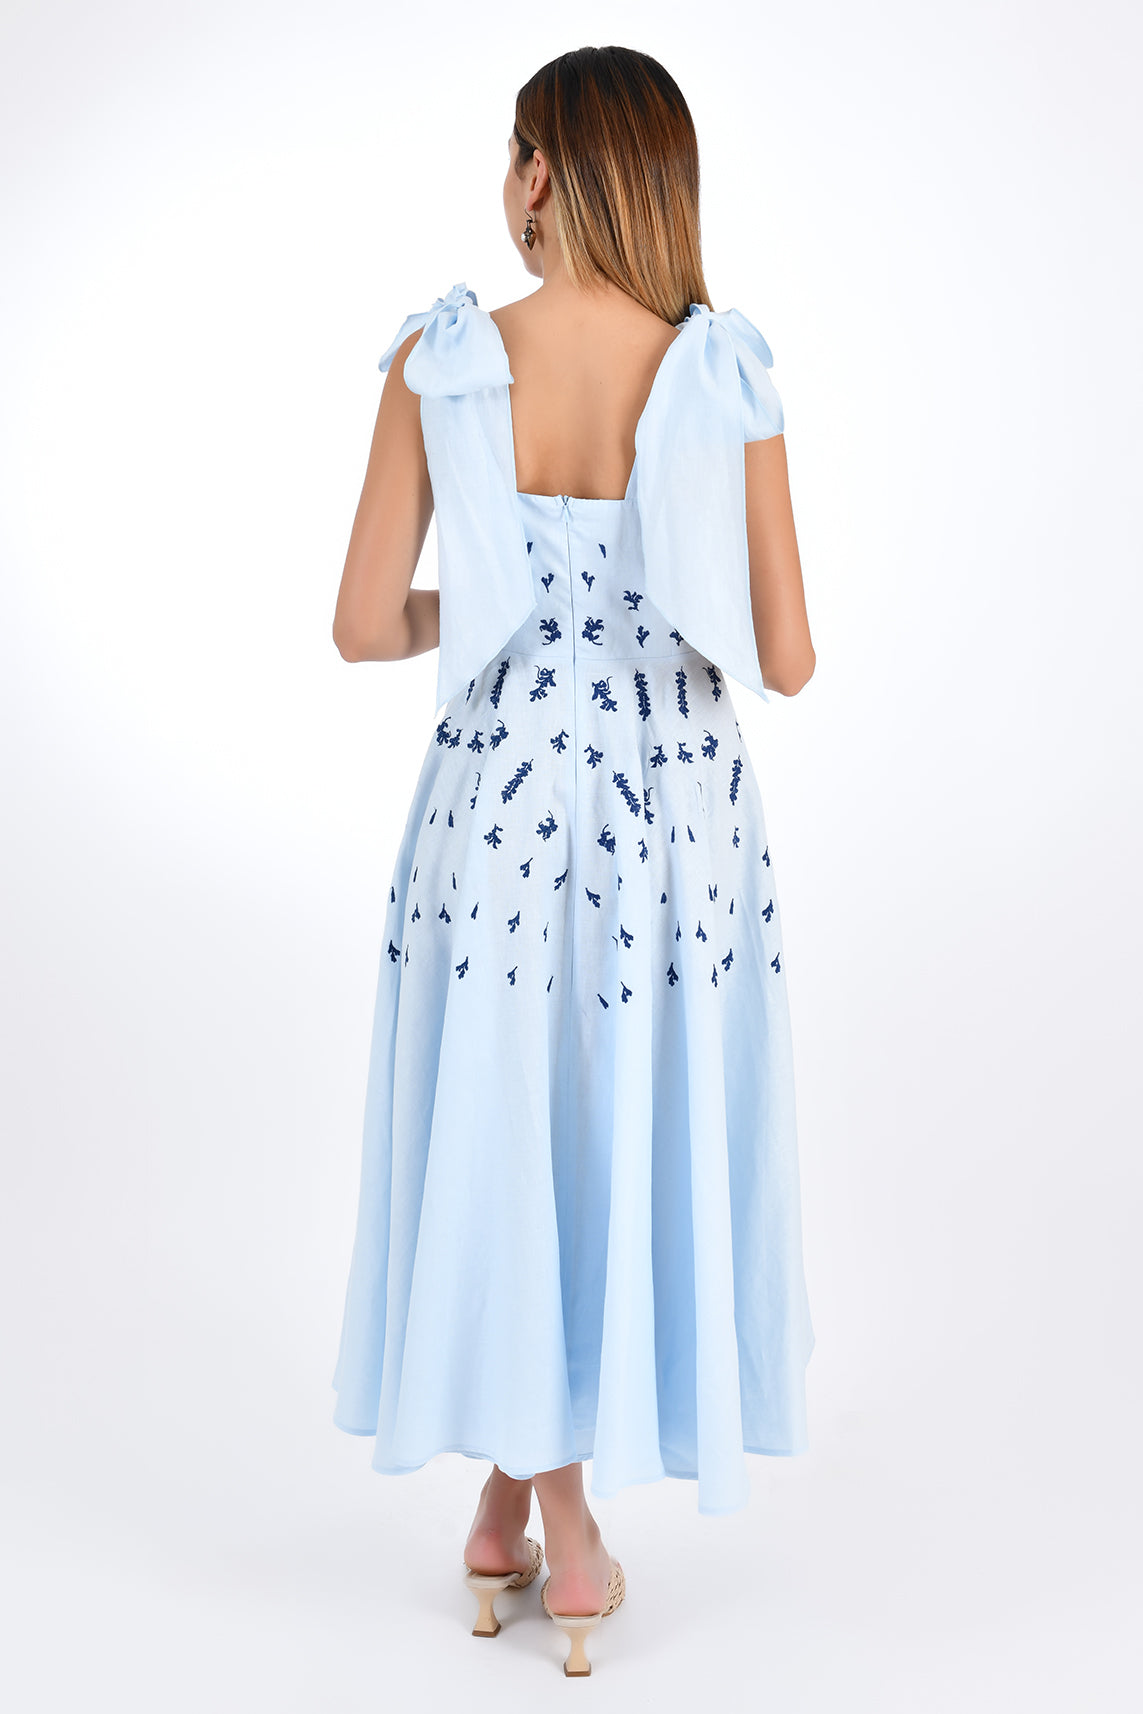 FANM MON  MIMOSE Dress (Marassa Collection)